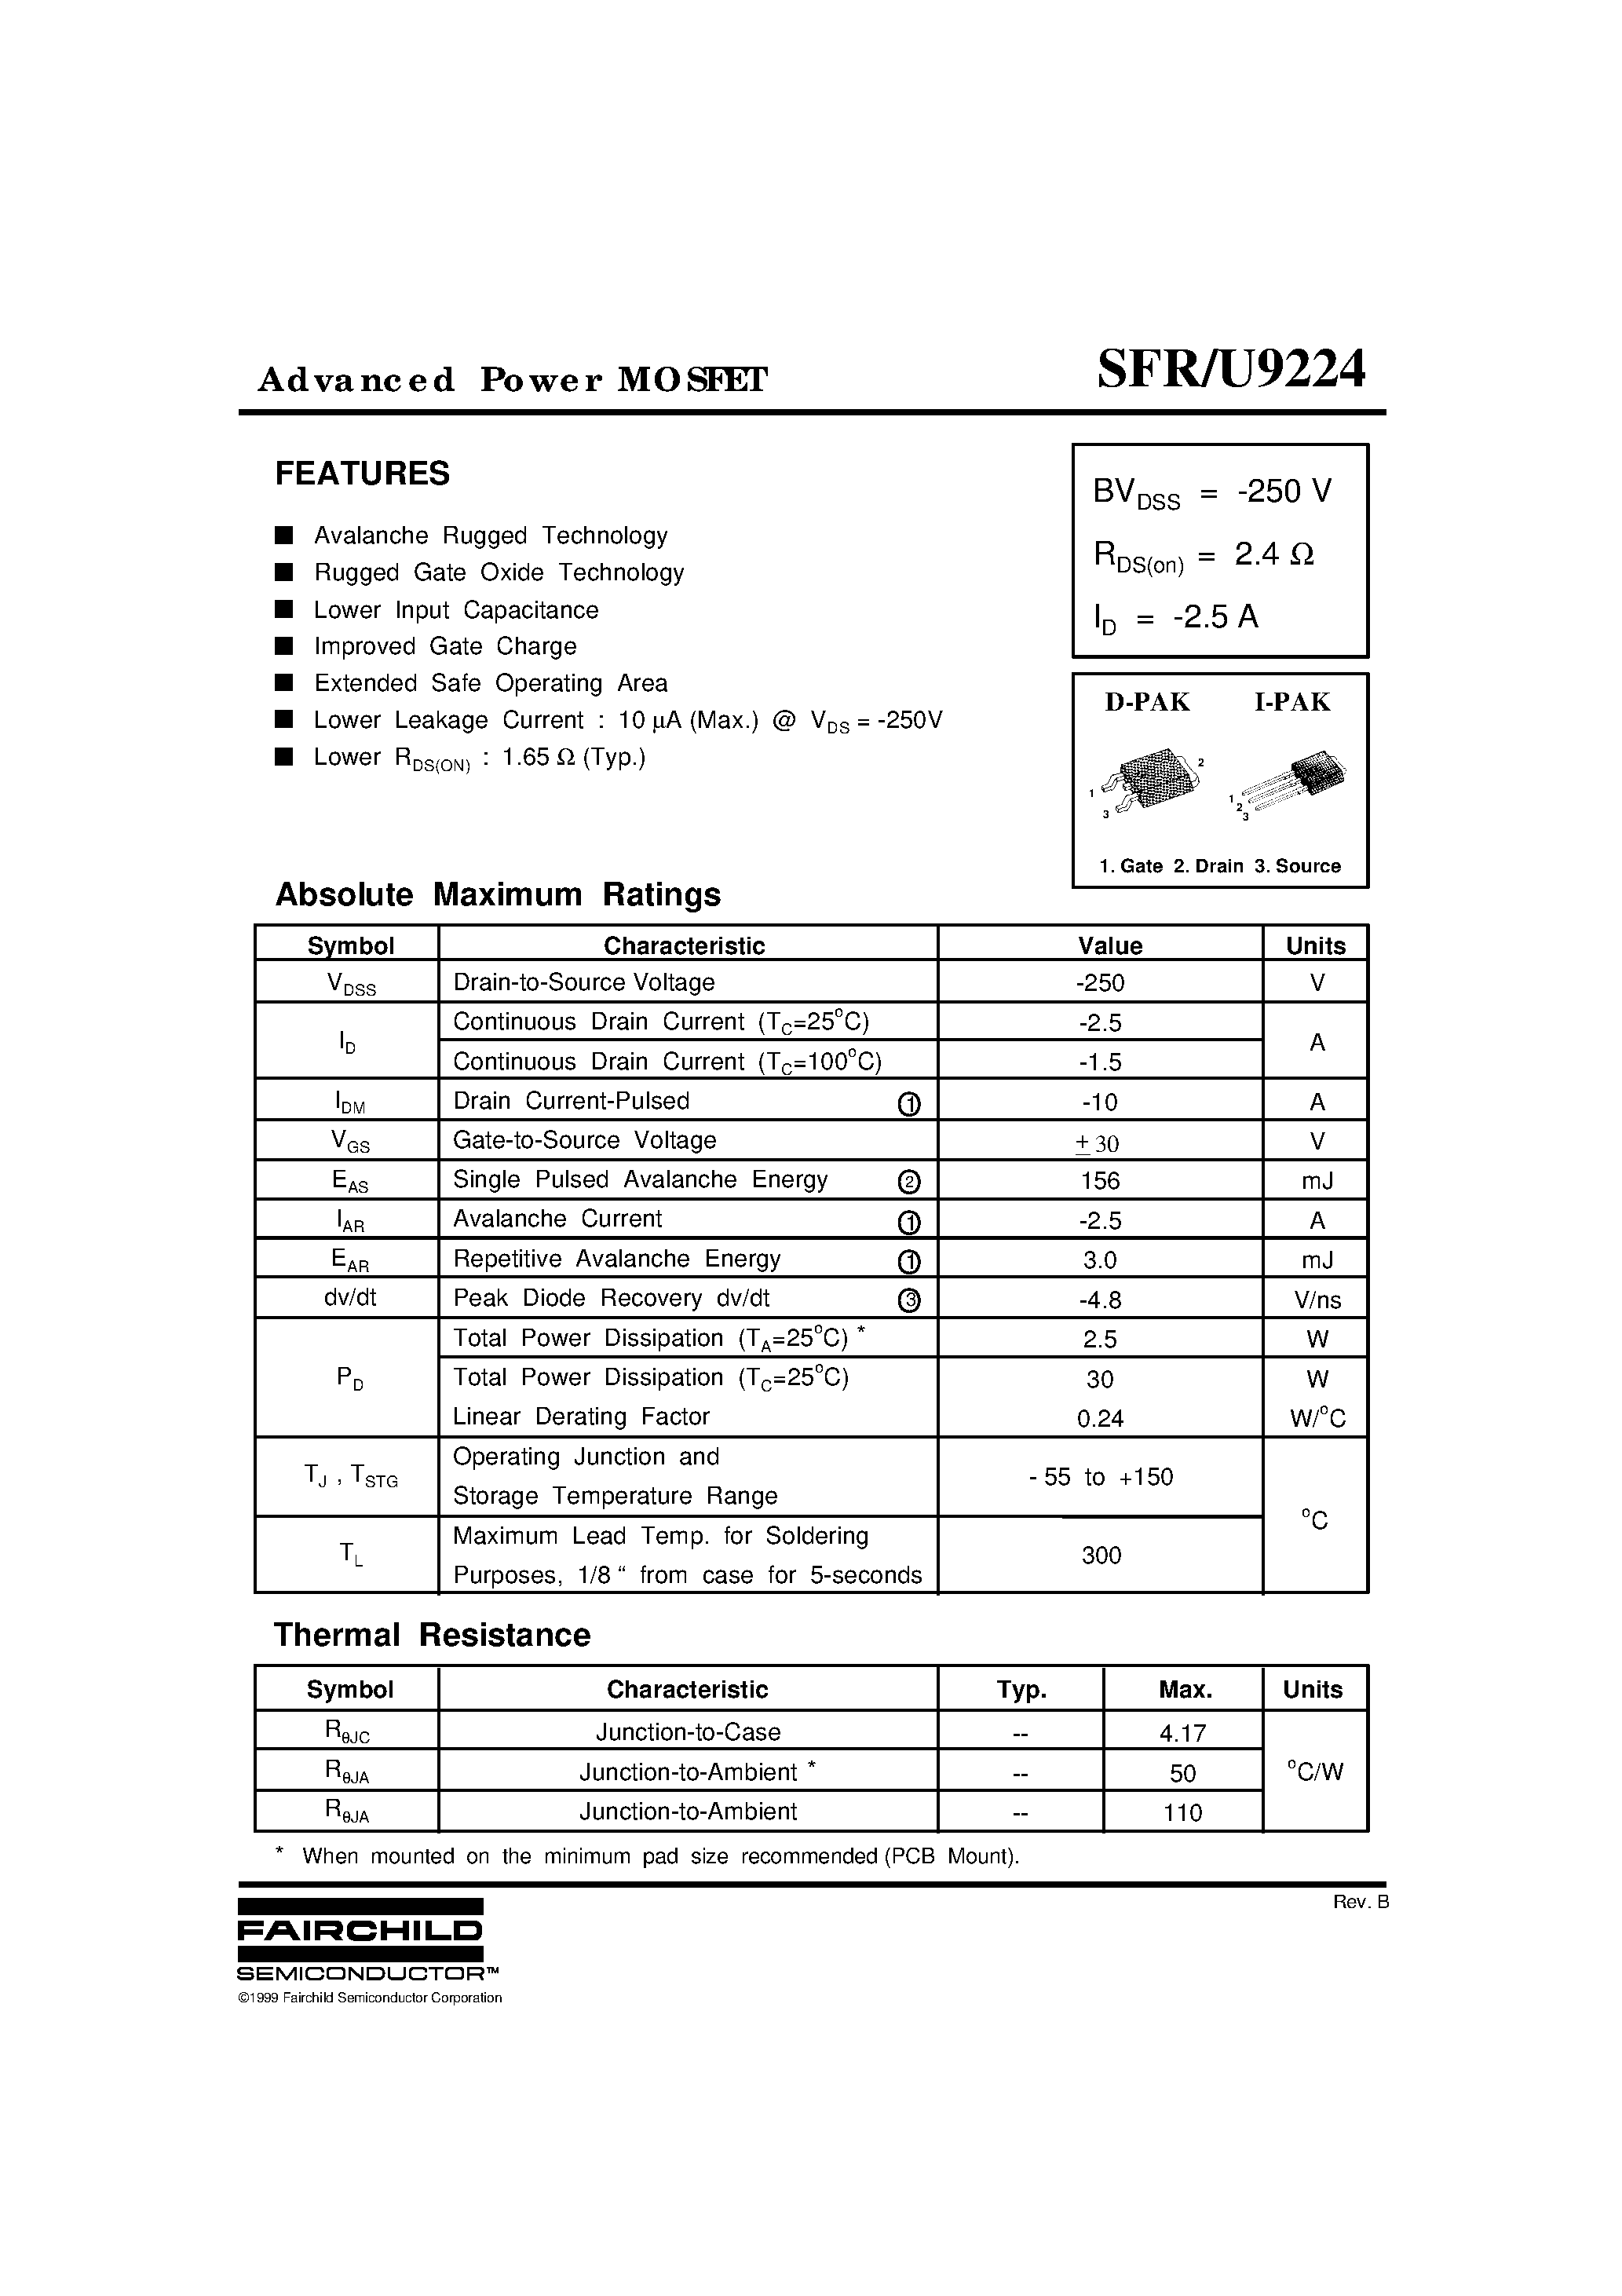 Datasheet SFRU9224 - Advanced Power MOSFET page 1